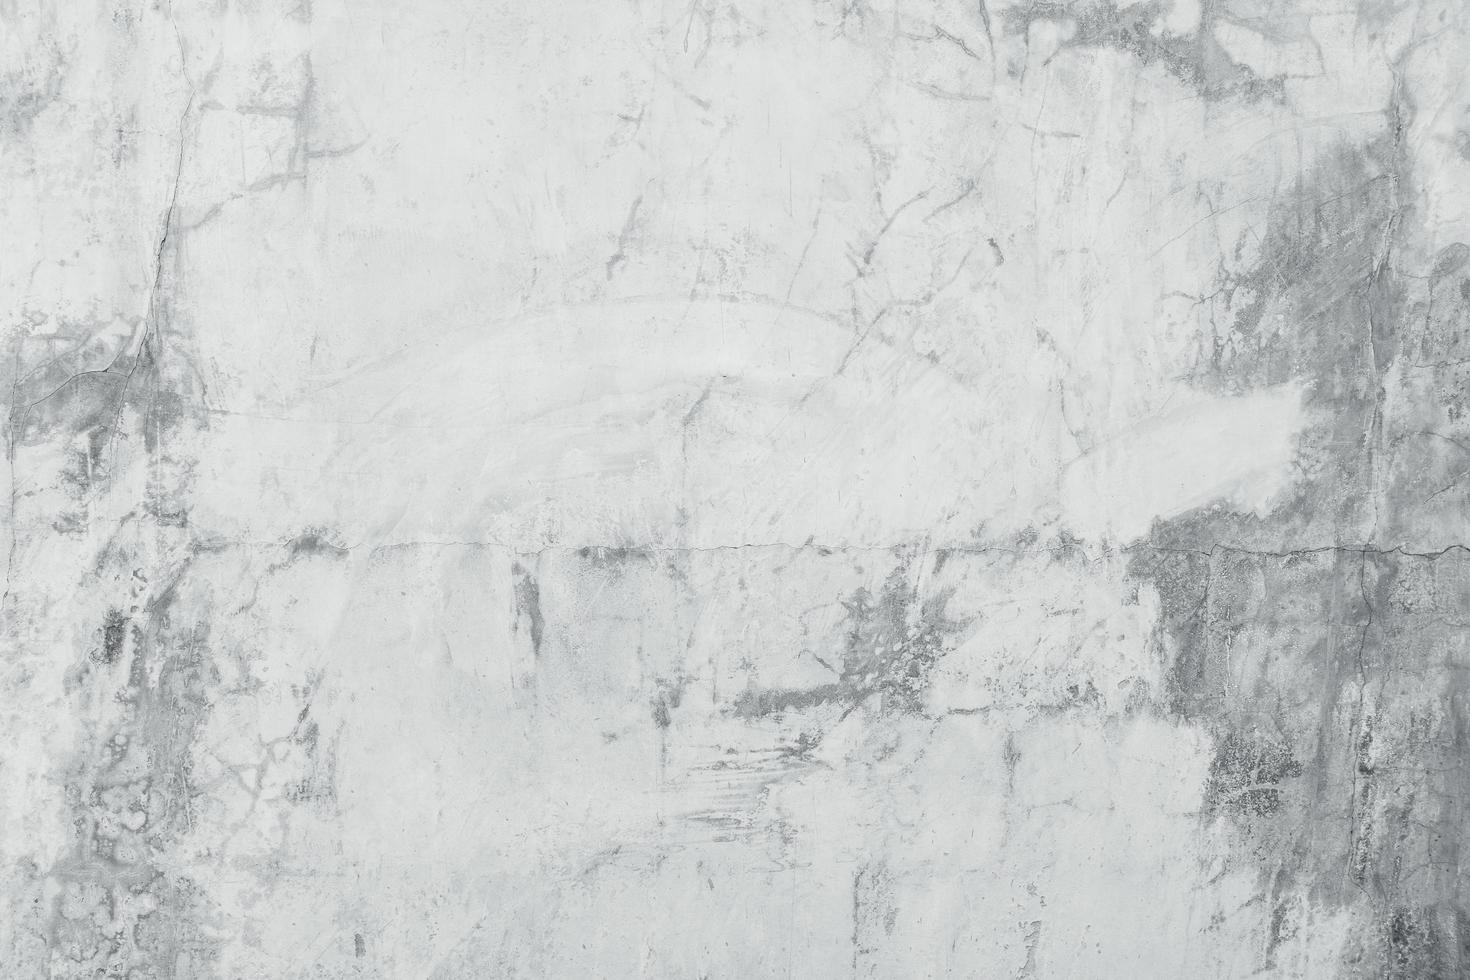 fundo de textura de parede de cimento preto e branco, parede de gesso cinza argamassa, estilo loft foto